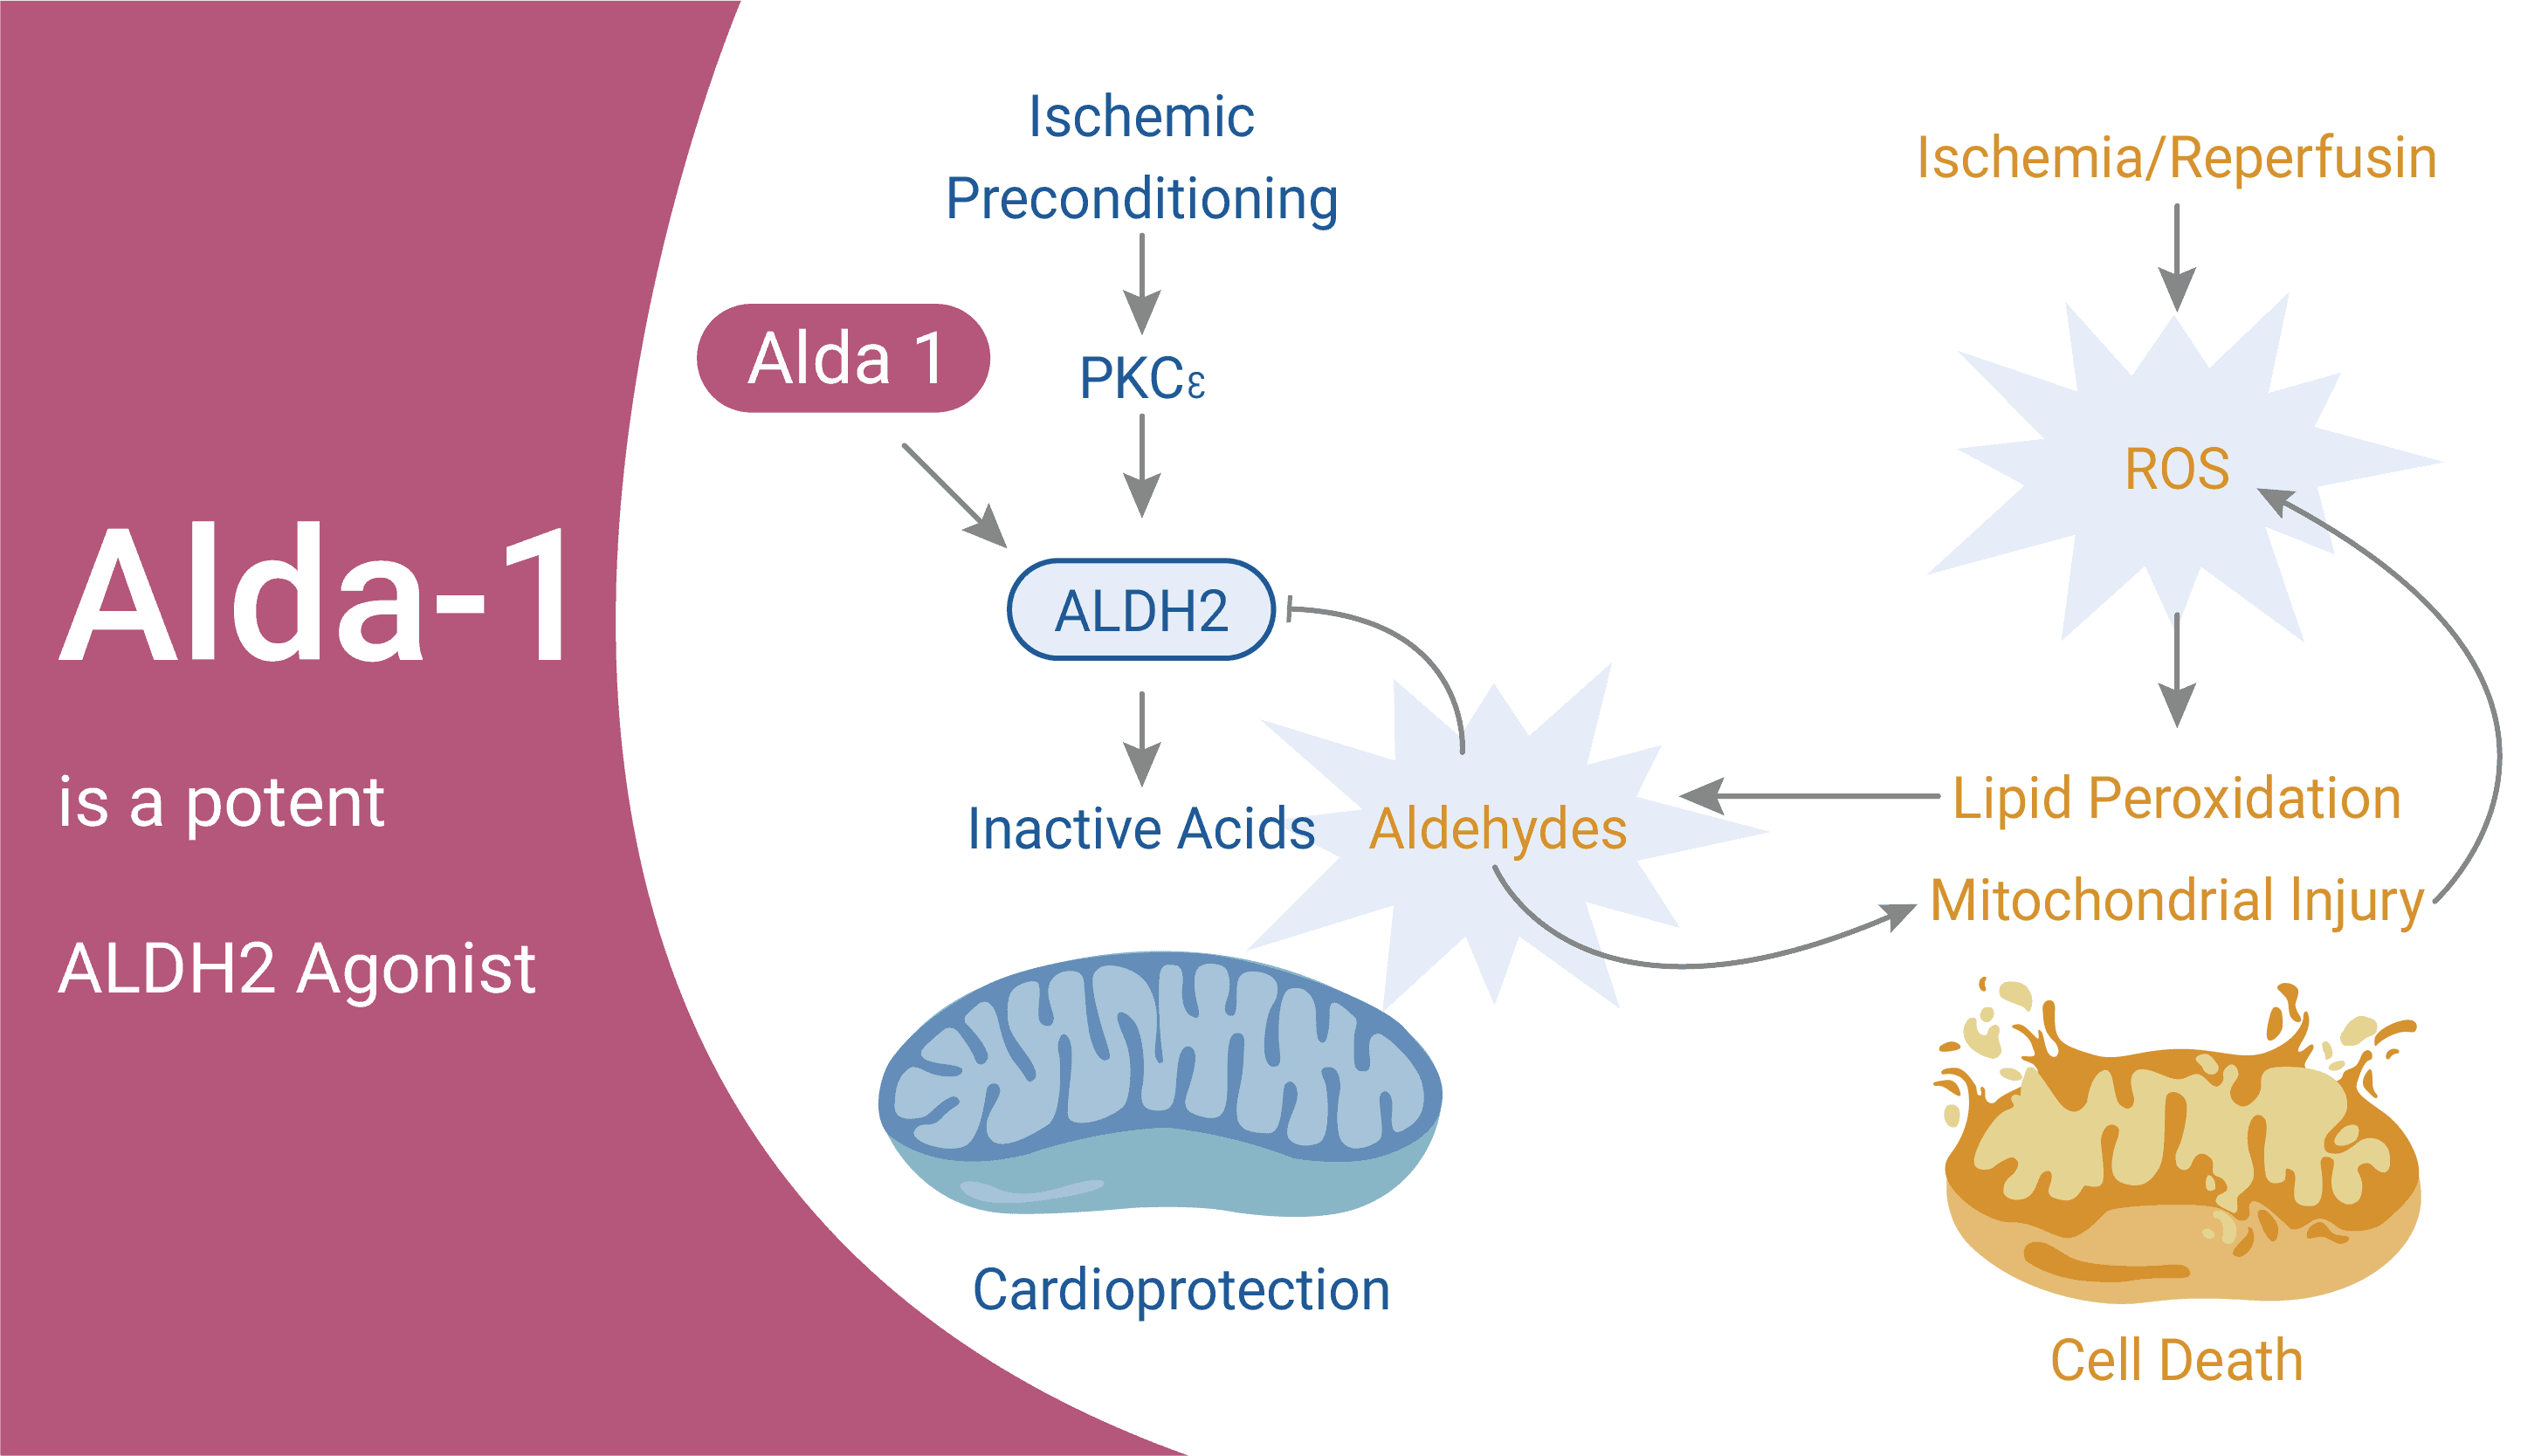 Alda-1 is a potent ALDH2 Agonist